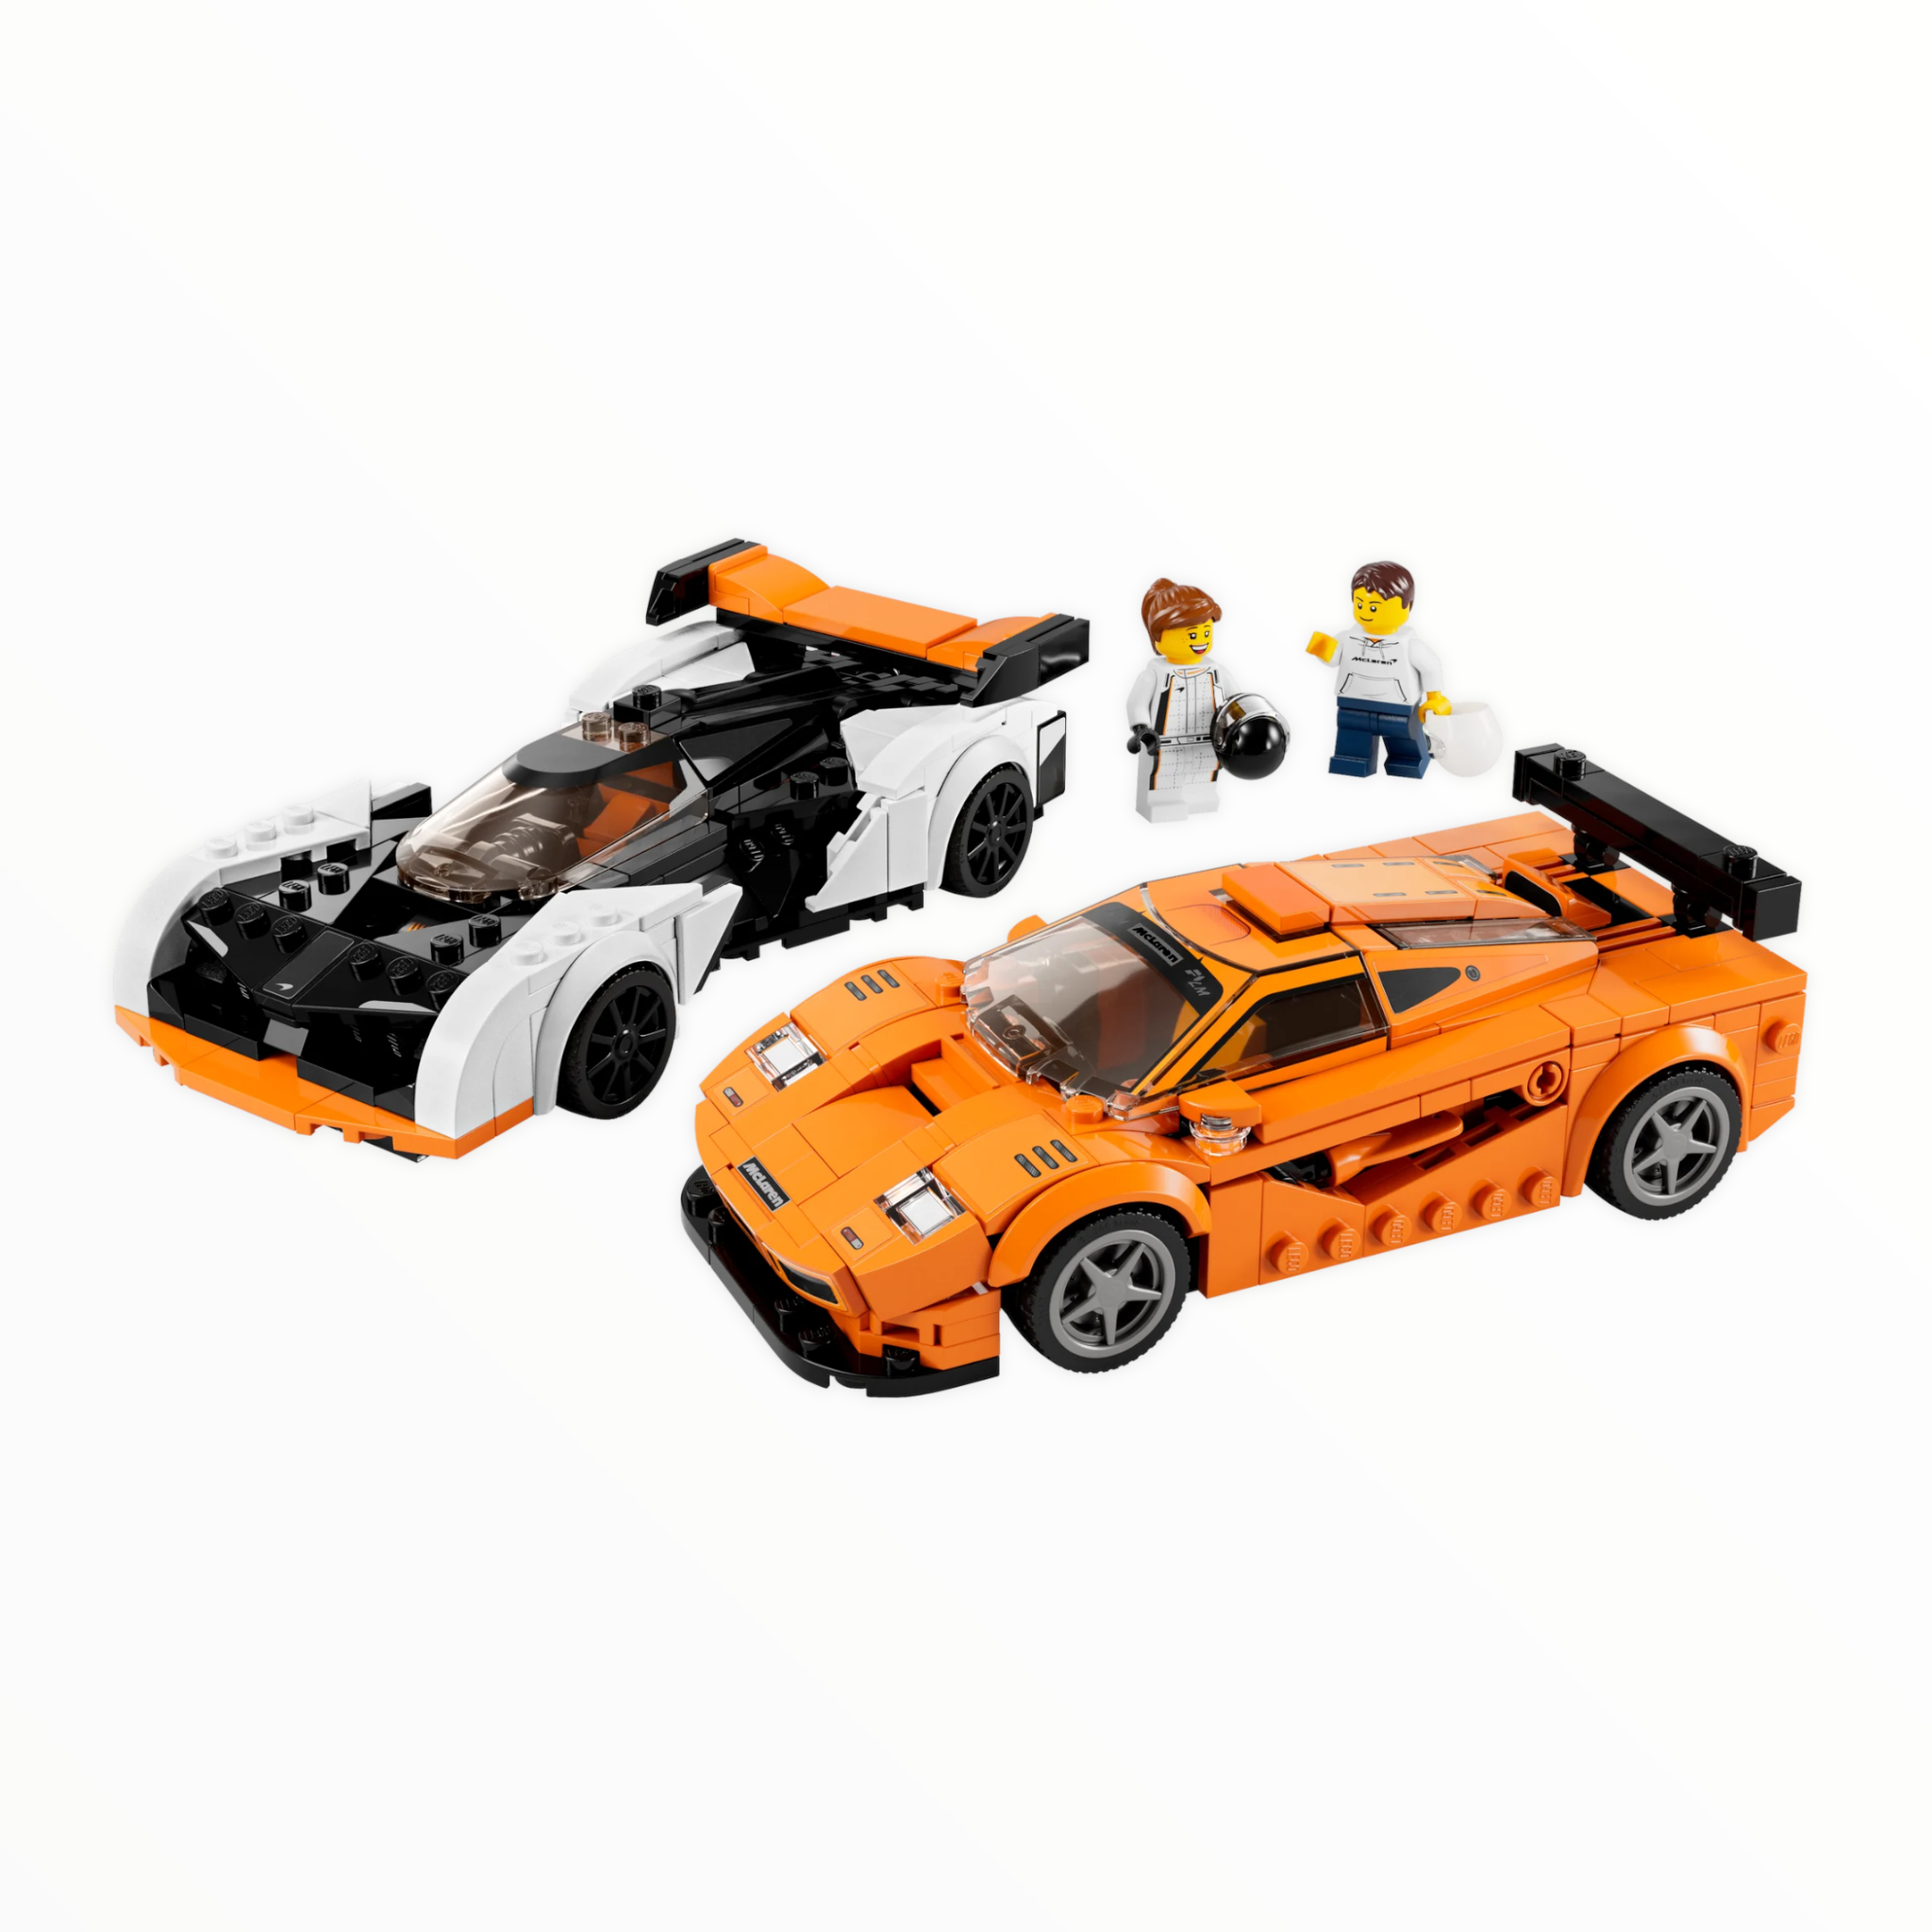 76918 Speed Champions McLaren Solus GT & McLaren F1 LM